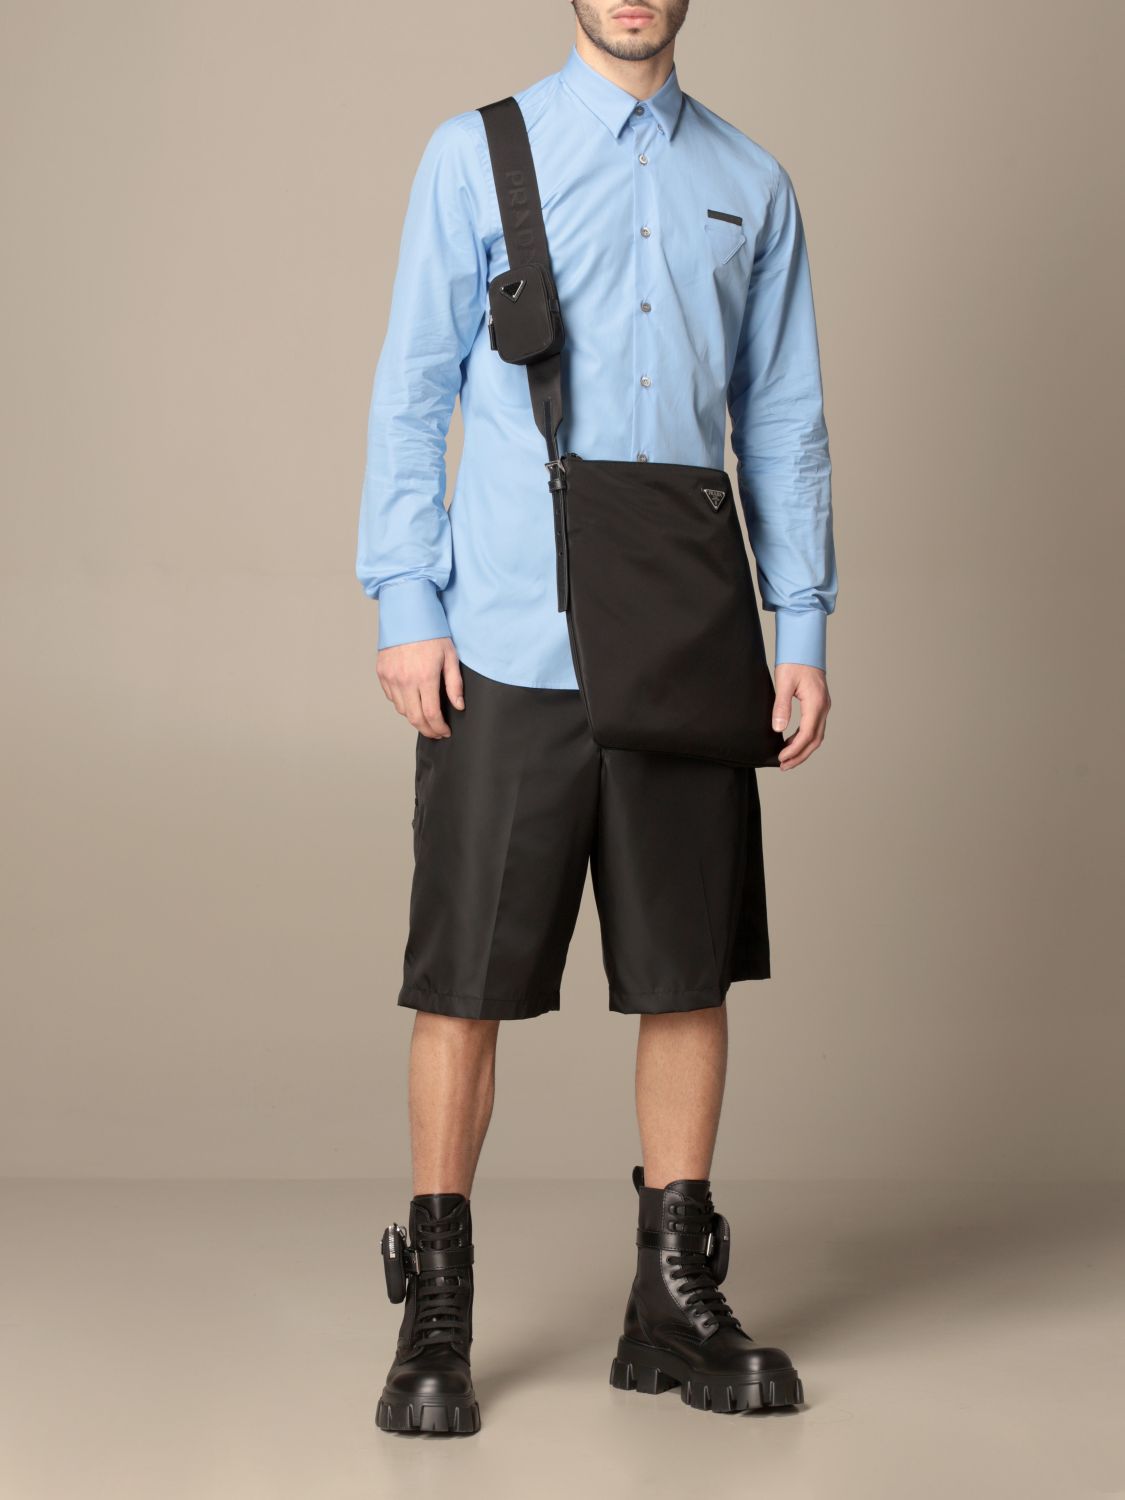 PRADA: nylon bag with triangular rubber logo - Black  Prada shoulder bag  2VH112 2DKO online at